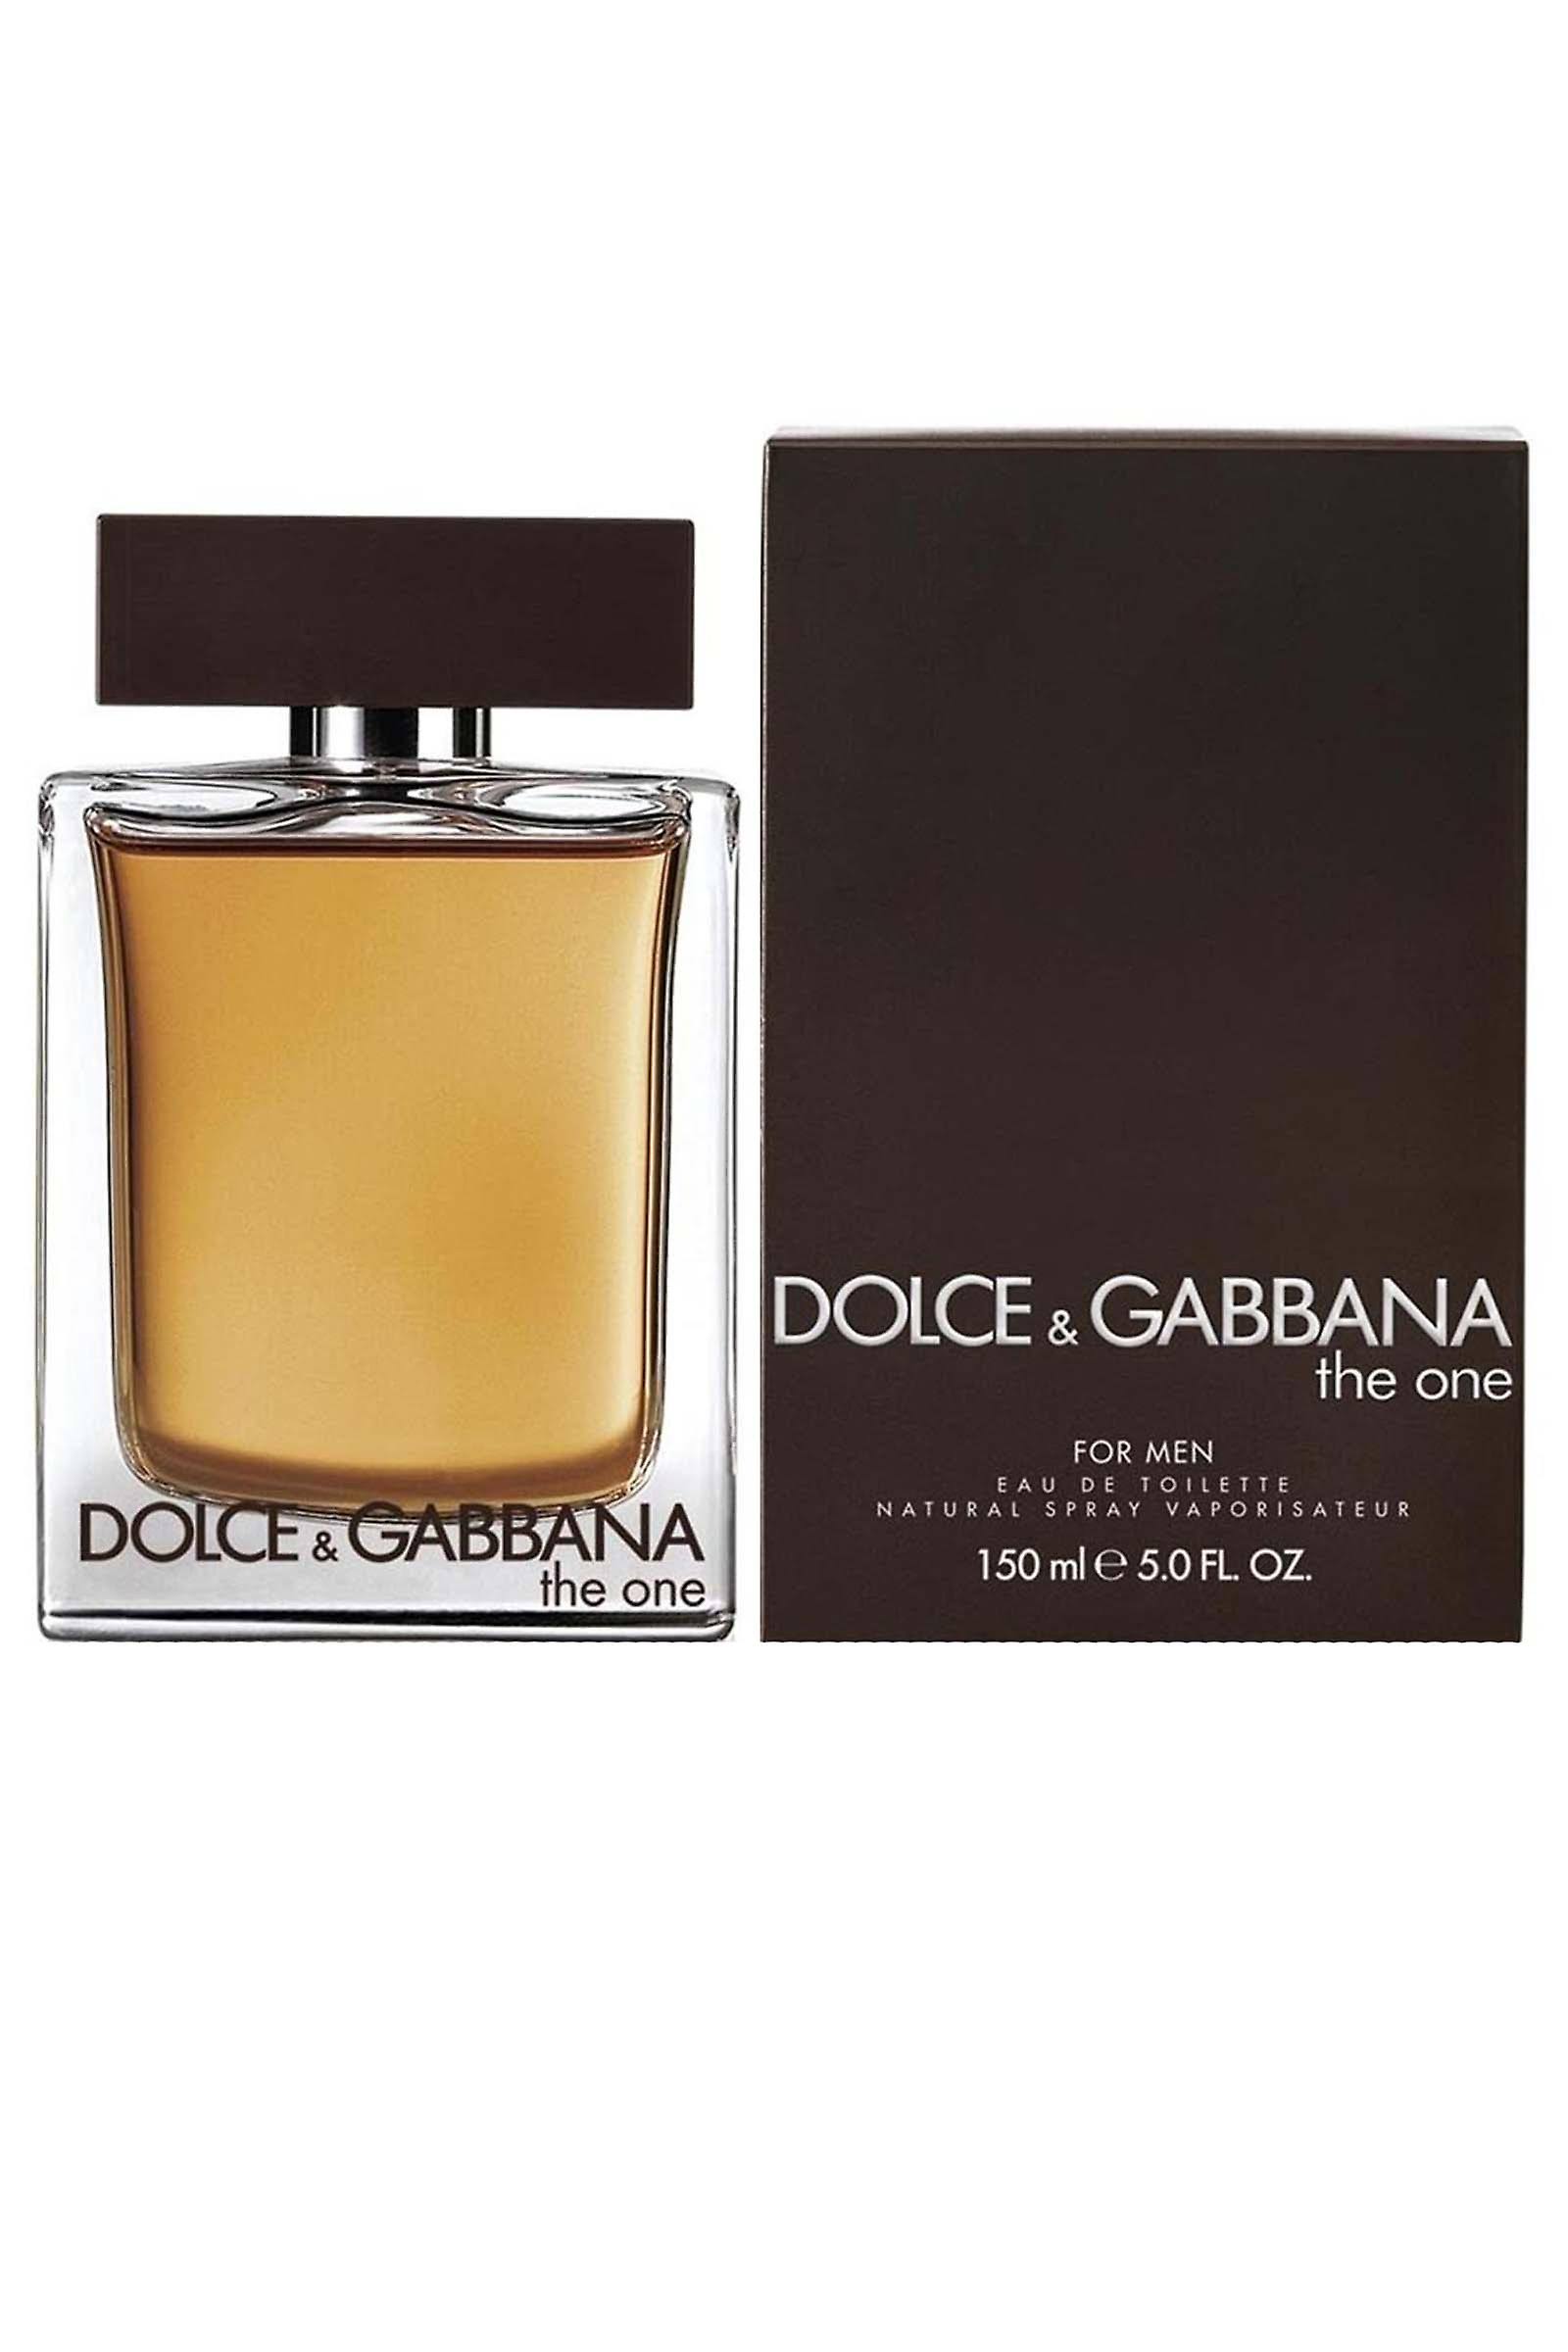 Dolce and Gabbana The One Eau De Toilette Spray - 150ml